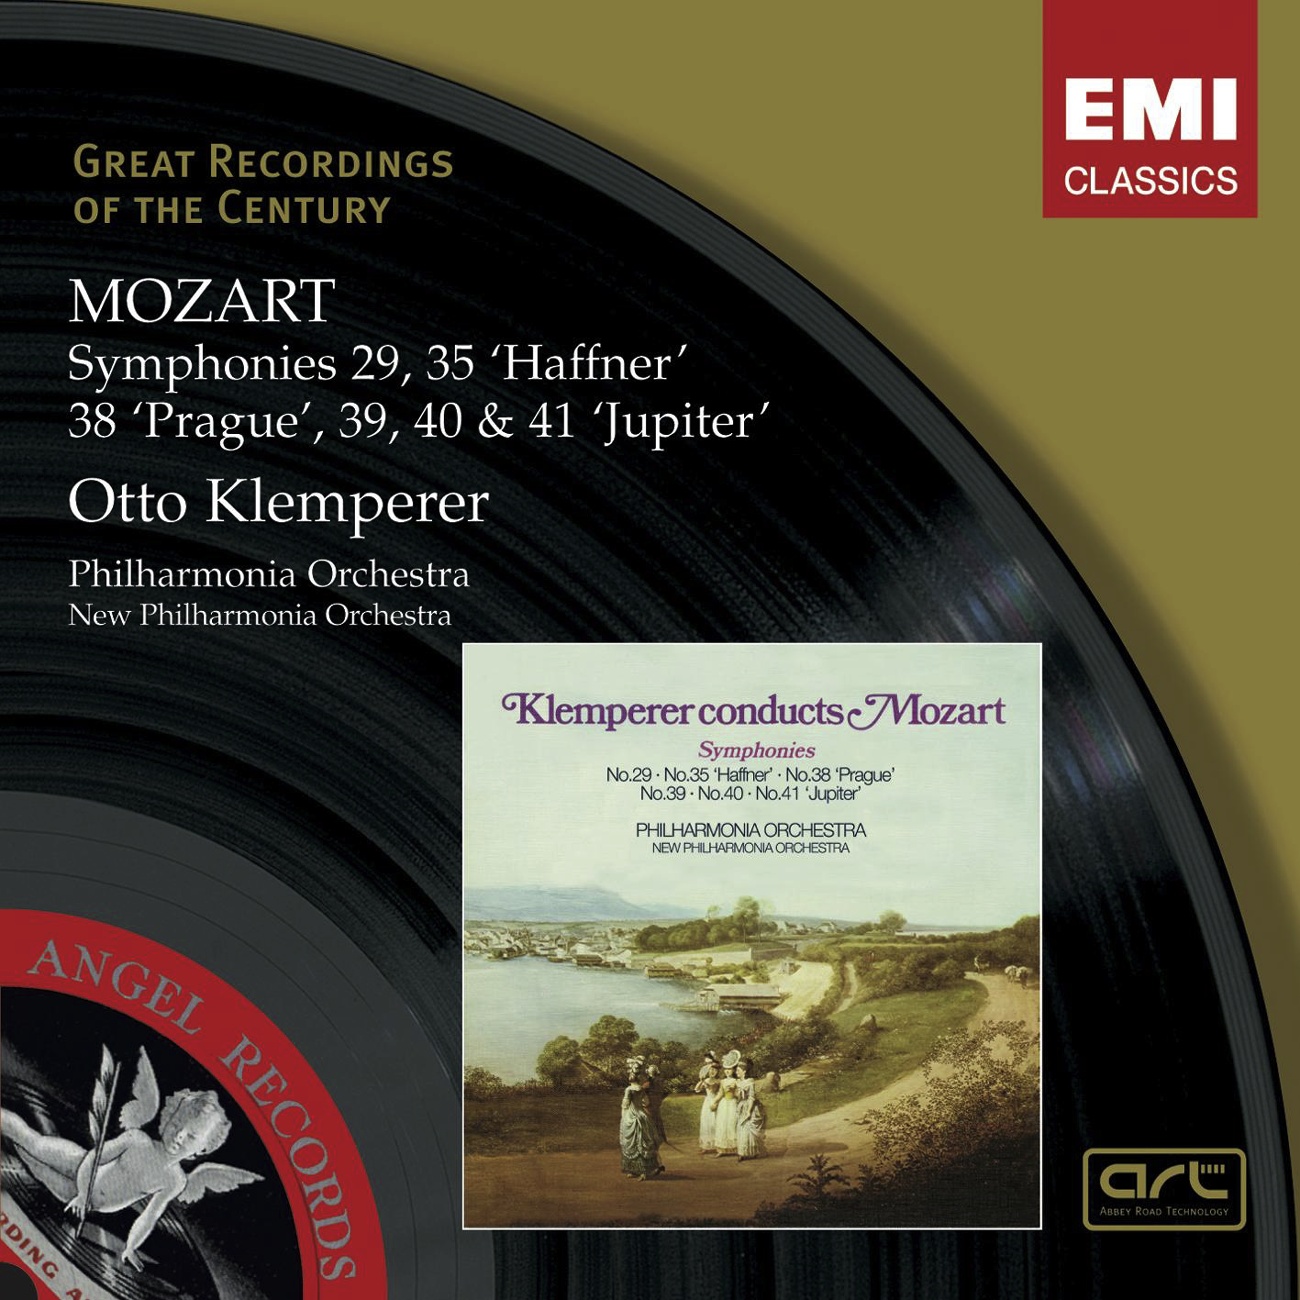 Symphony No. 40 in G minor K550 (2000 Digital Remaster): Menuetto